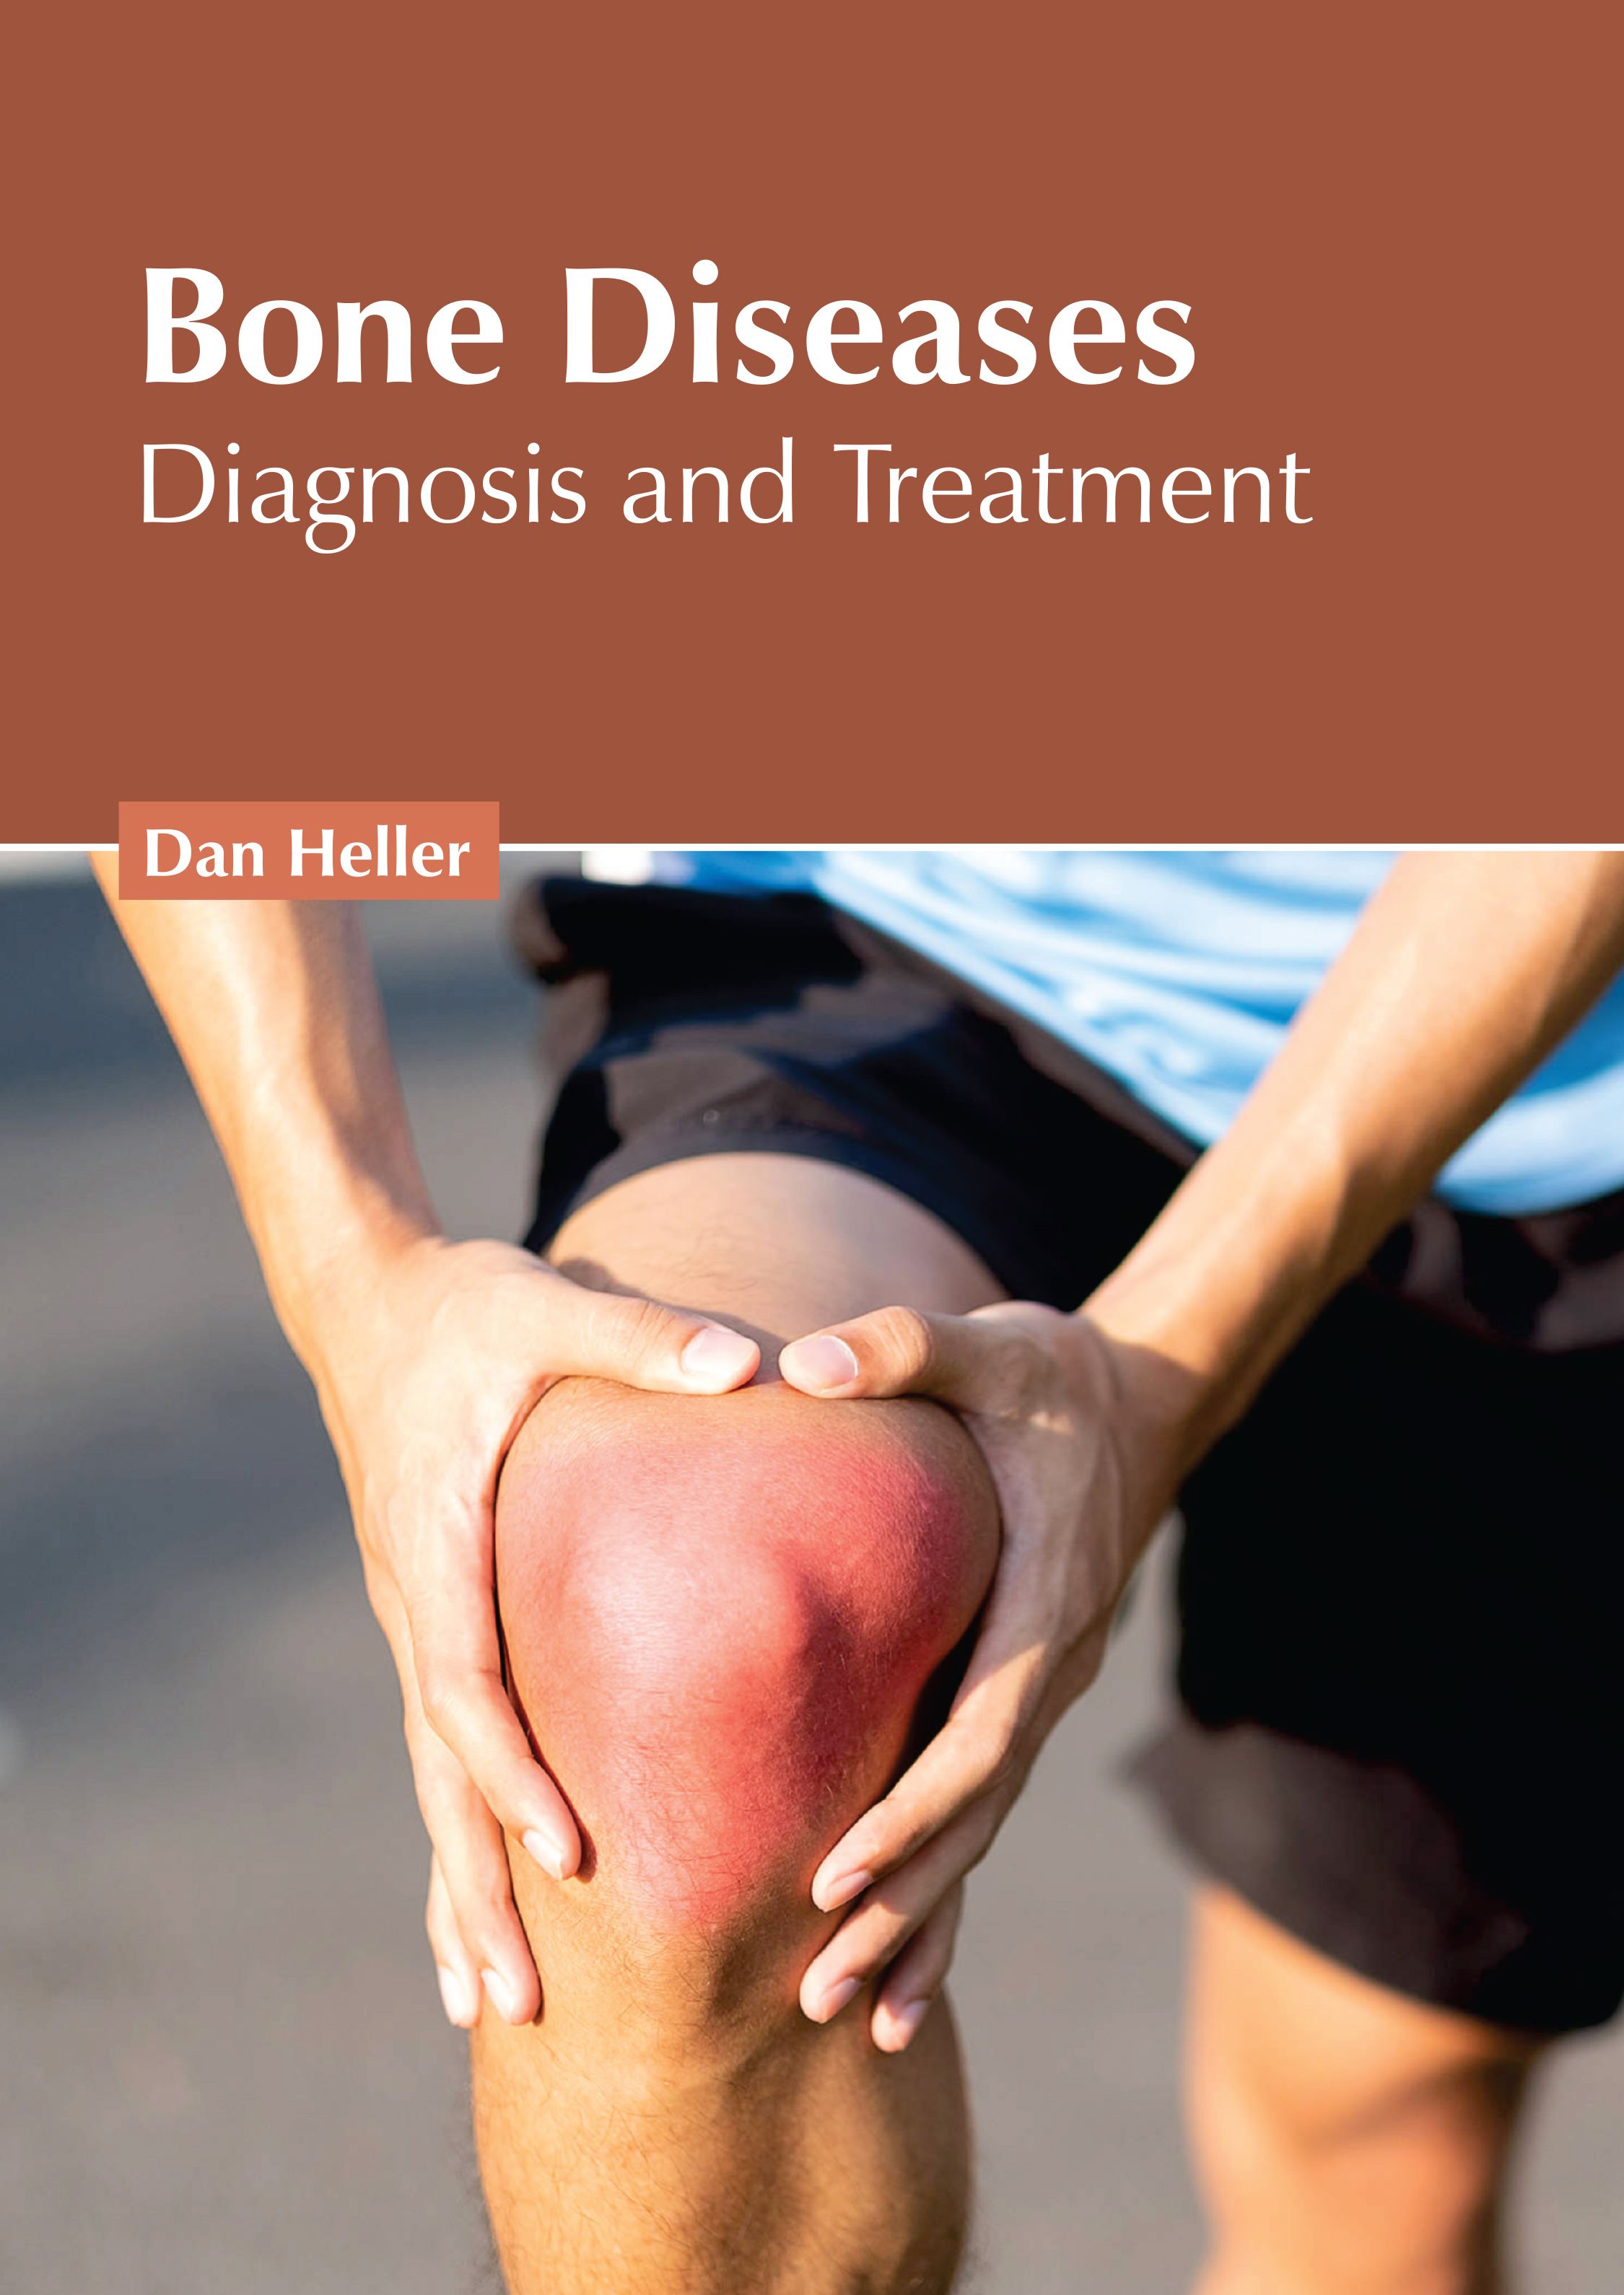 BONE DISEASES: DIAGNOSIS AND TREATMENT